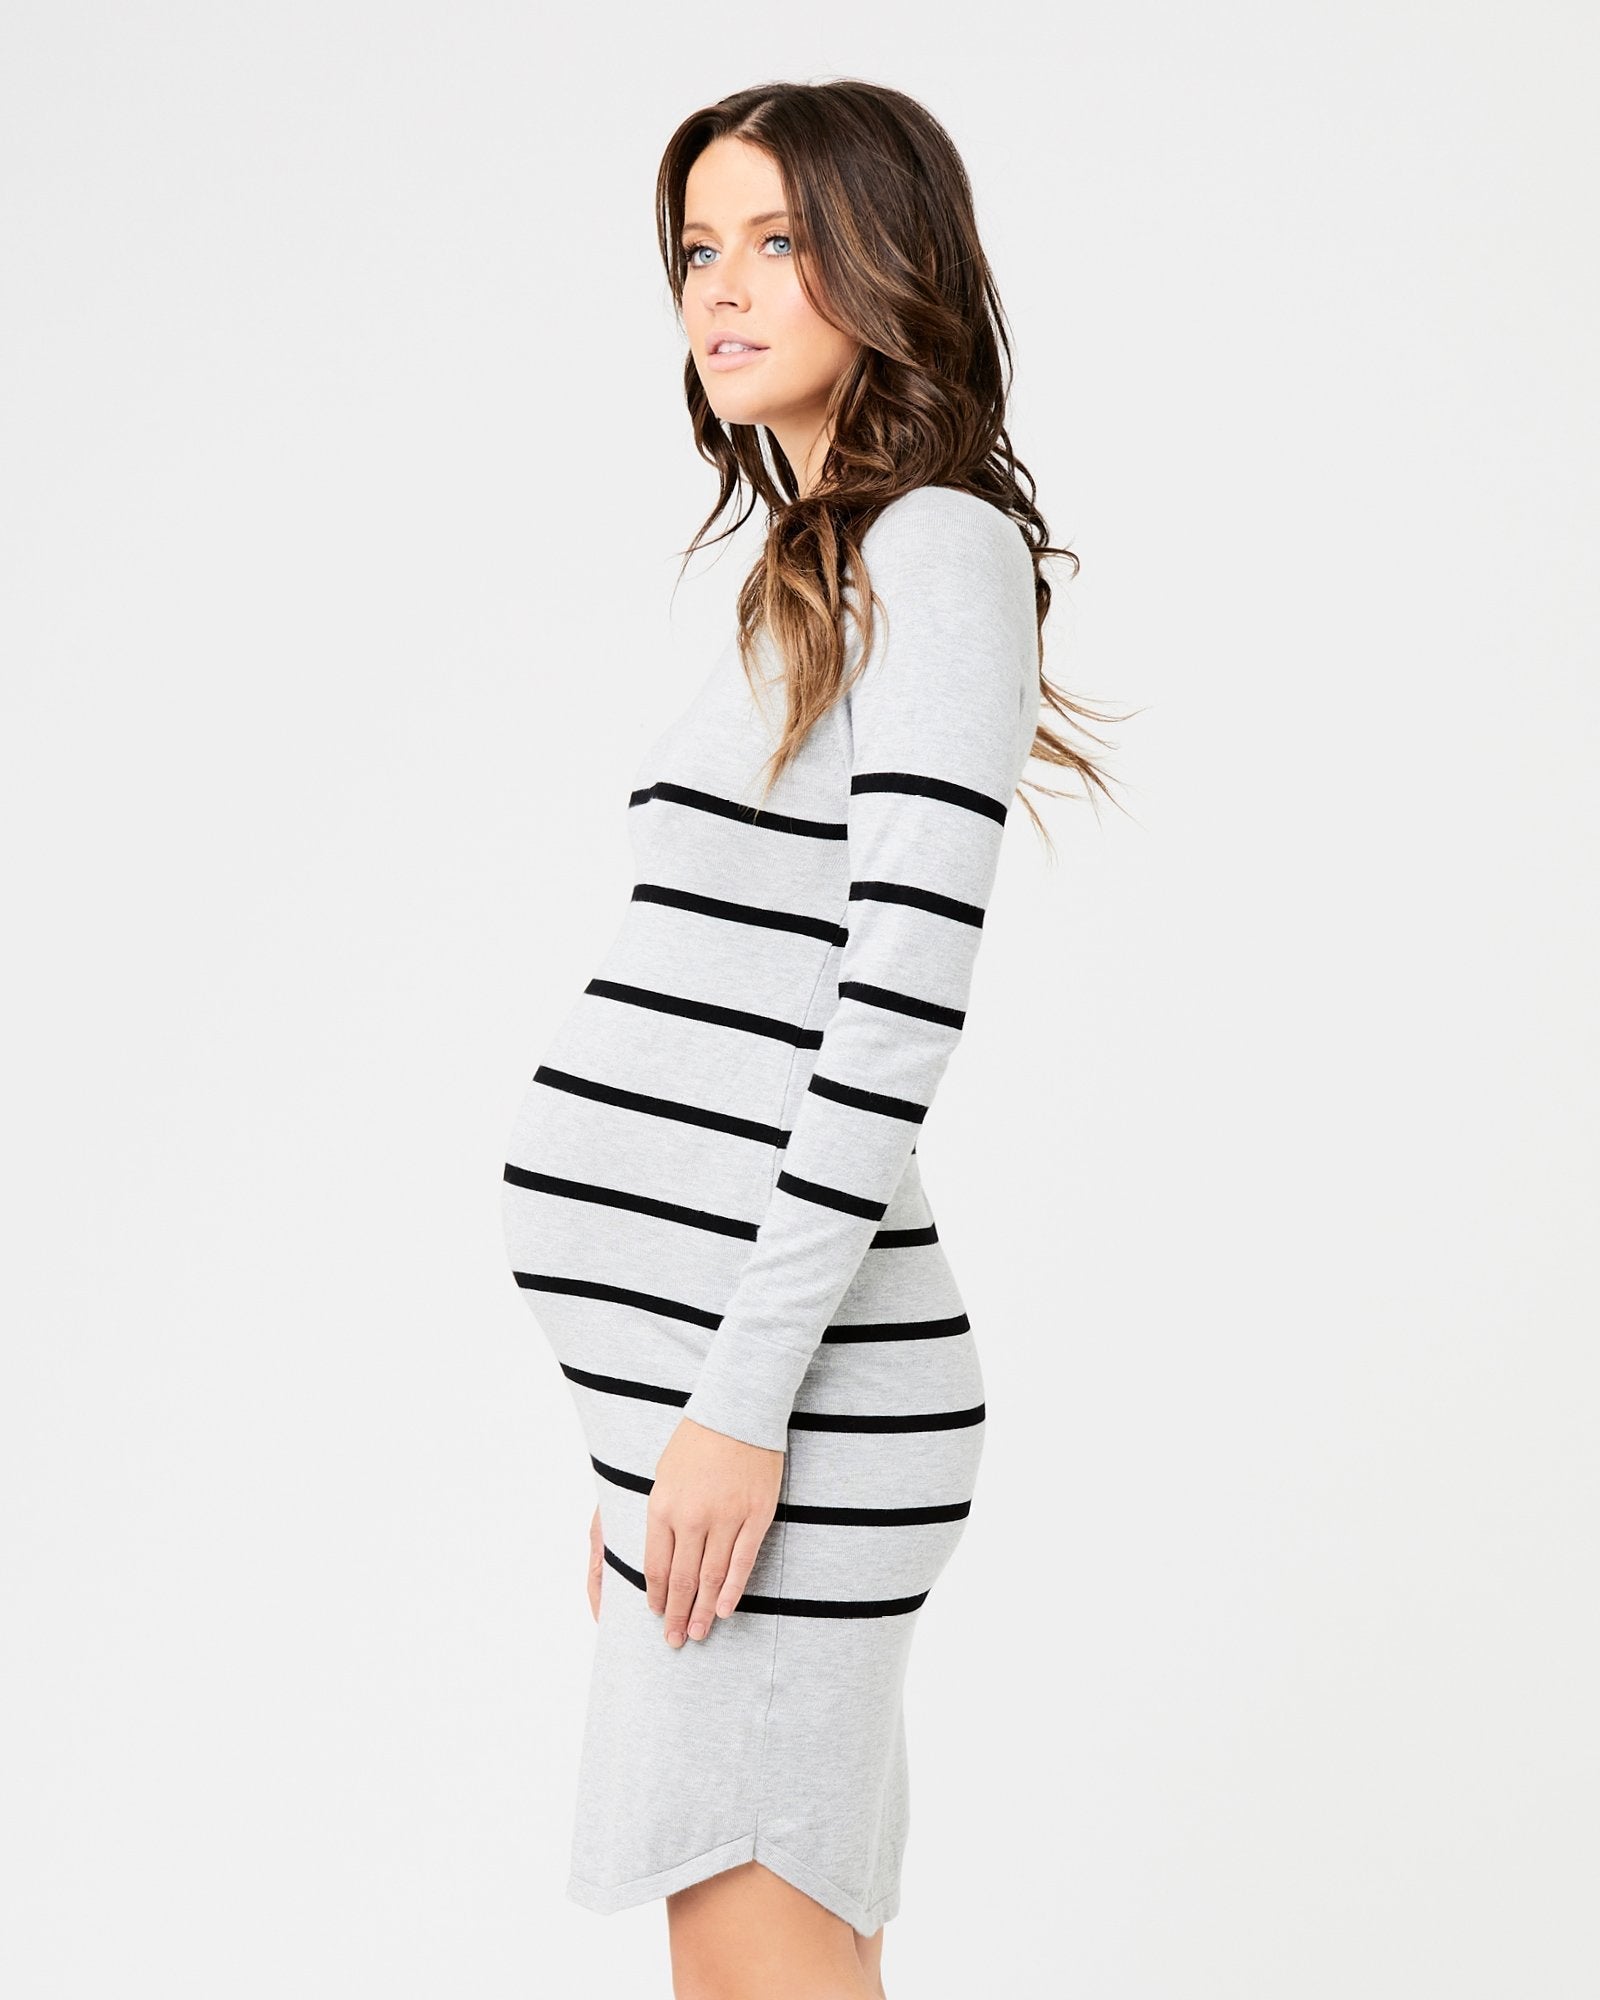 Ripe Maternity Valerie Knit Tunic Sweater Dress Black/Ecru